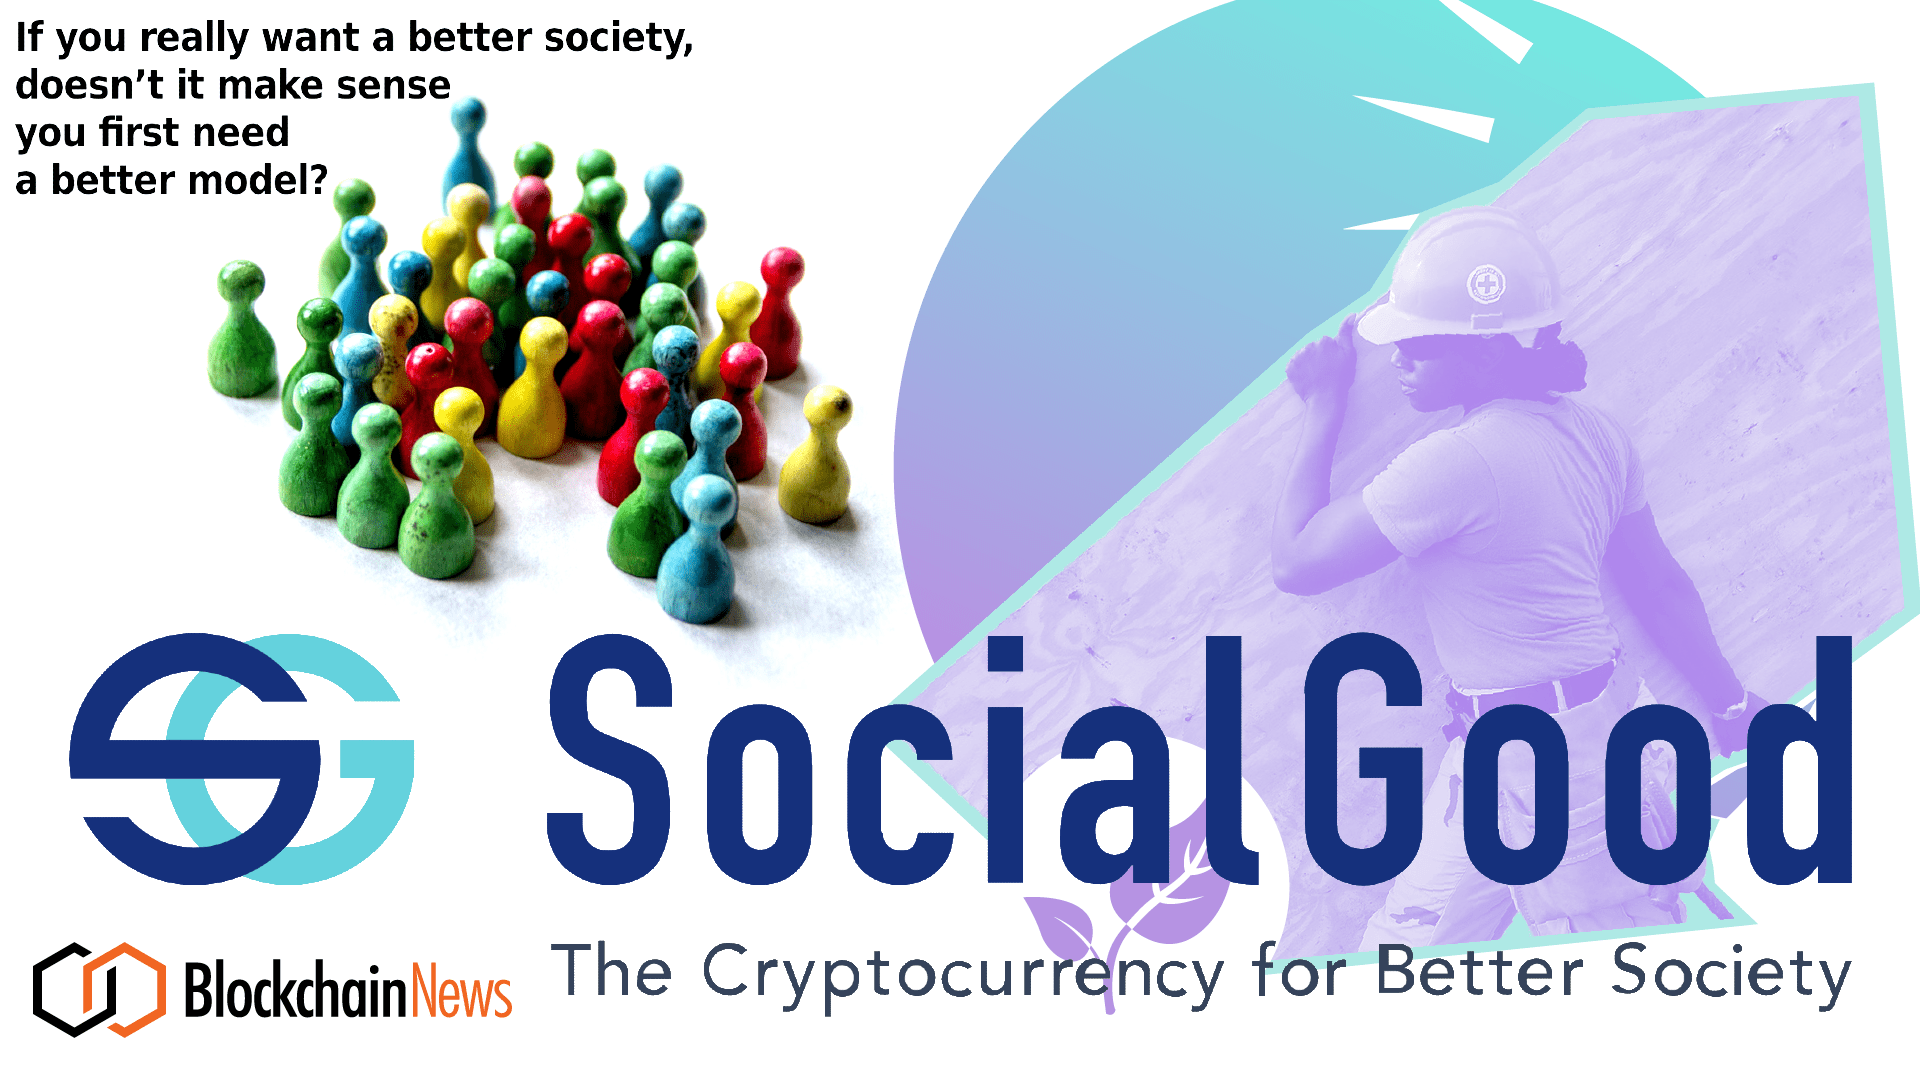 SocialGood, social, good, token, donation, nonprofit, cryptoback, revolution, economic,